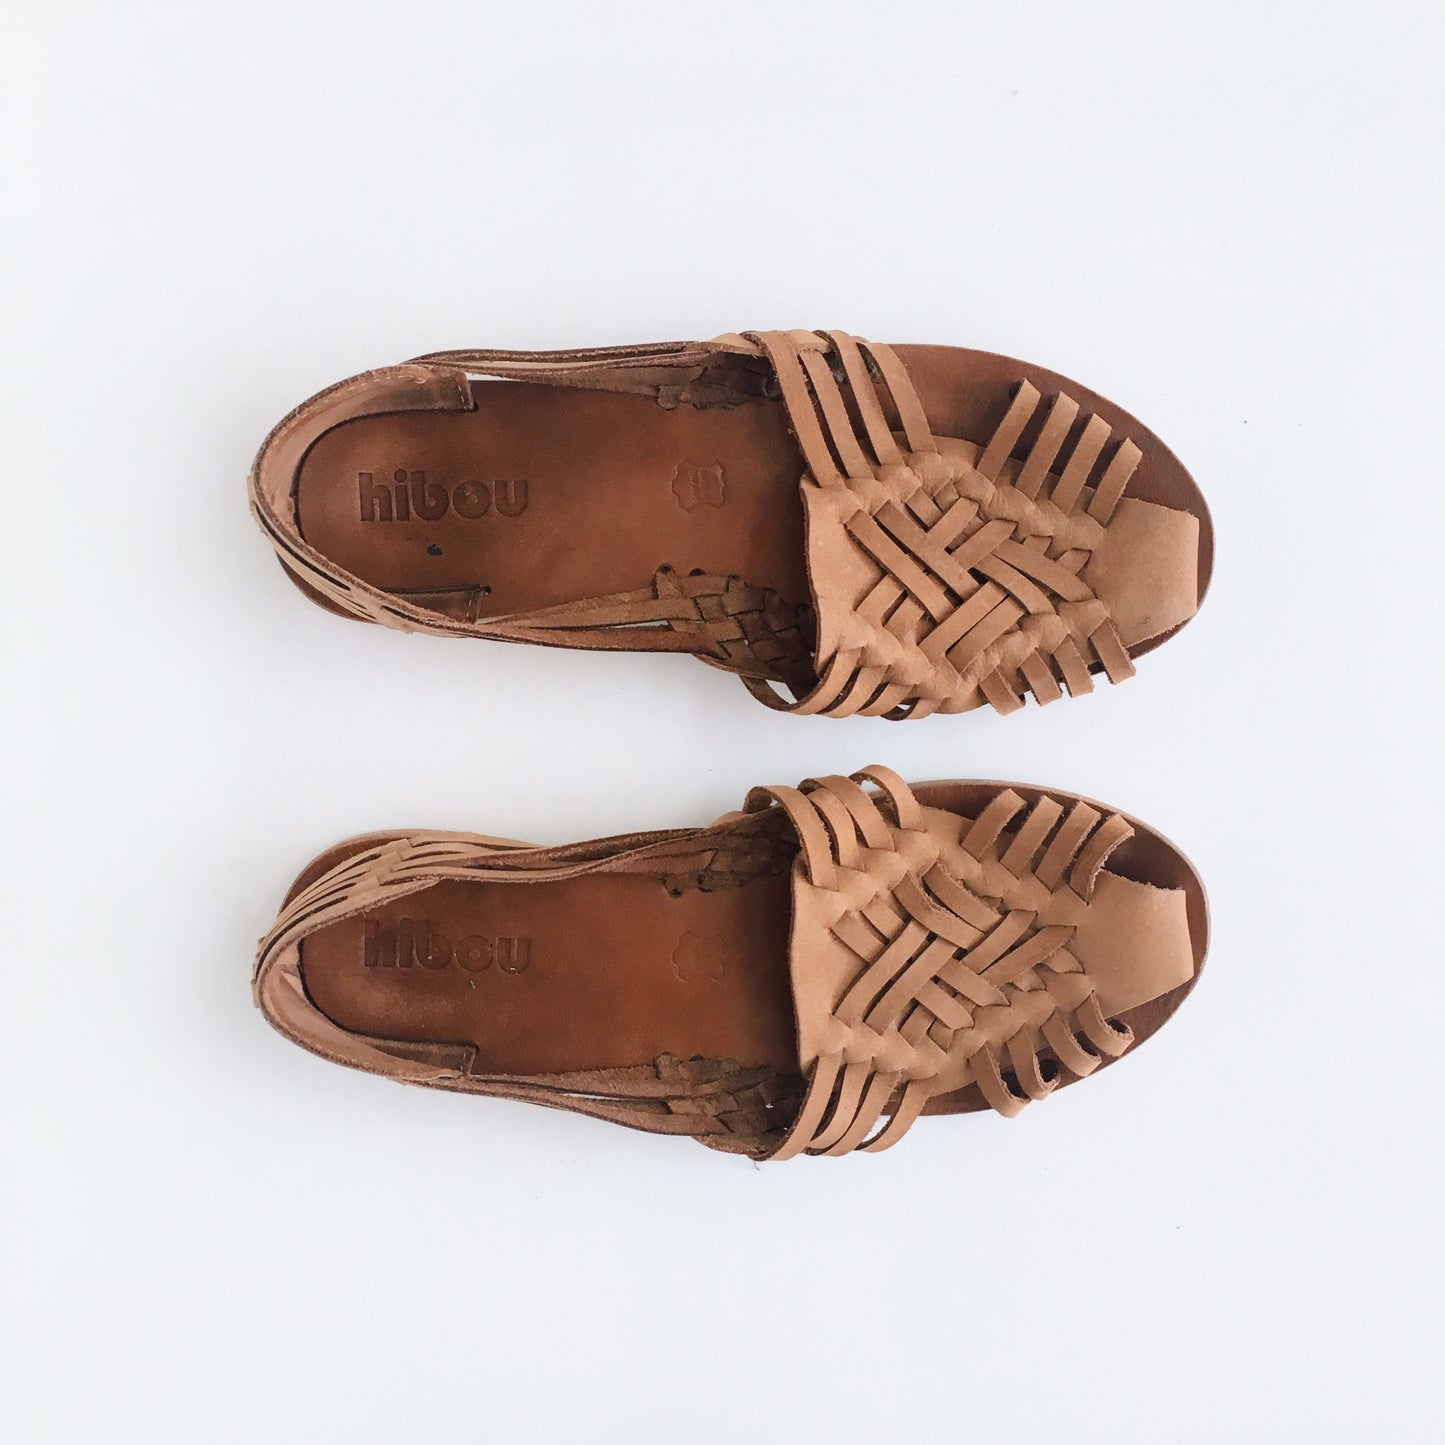 Hibou Leather Sandals - size 8 - Little Burgundy